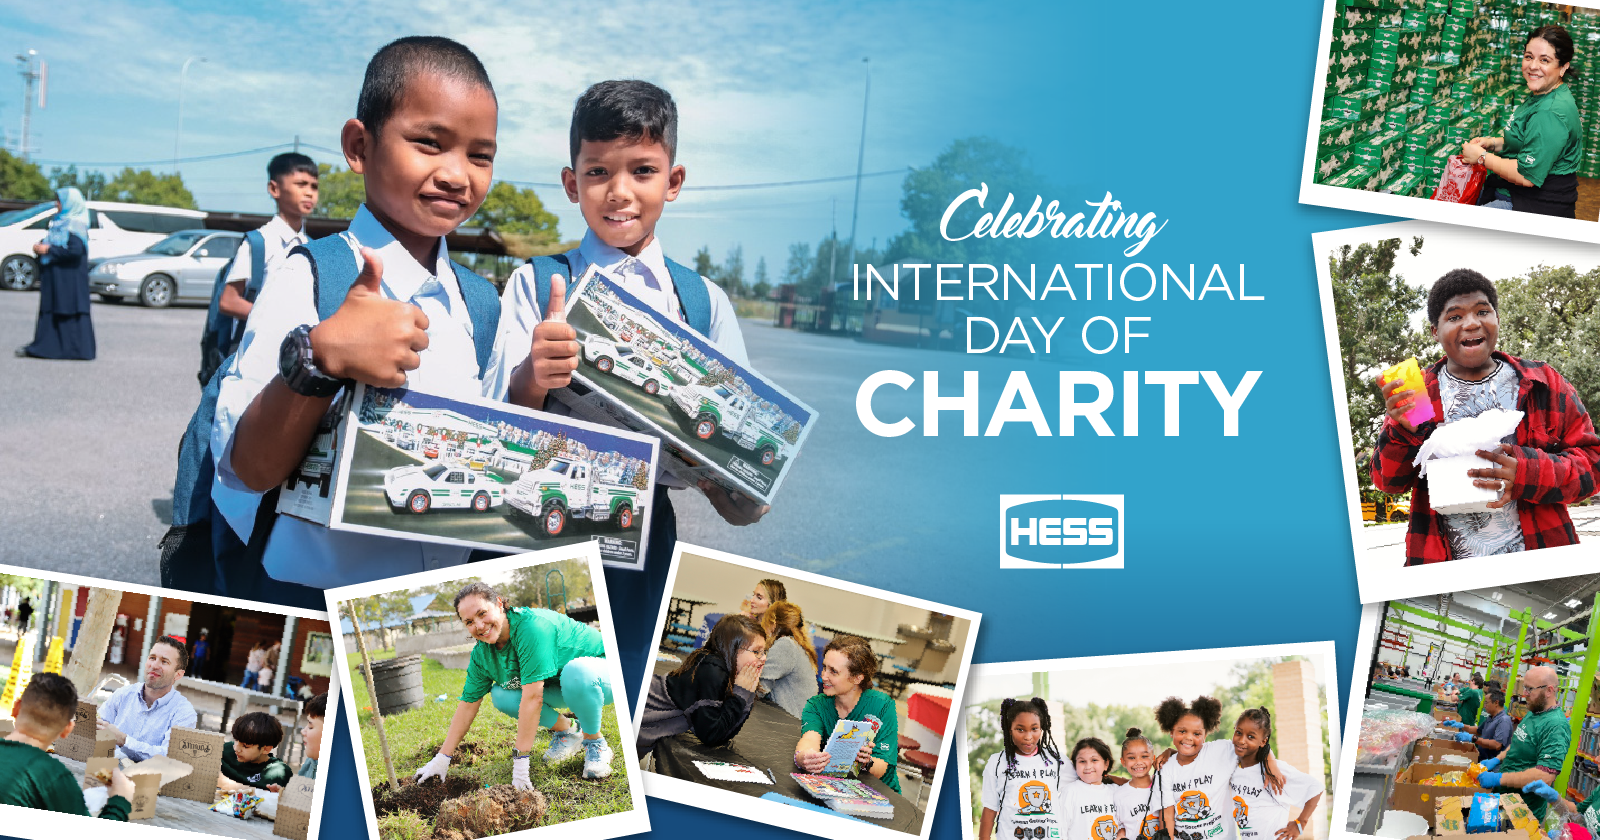 Hess Celebrates International Day of Charity